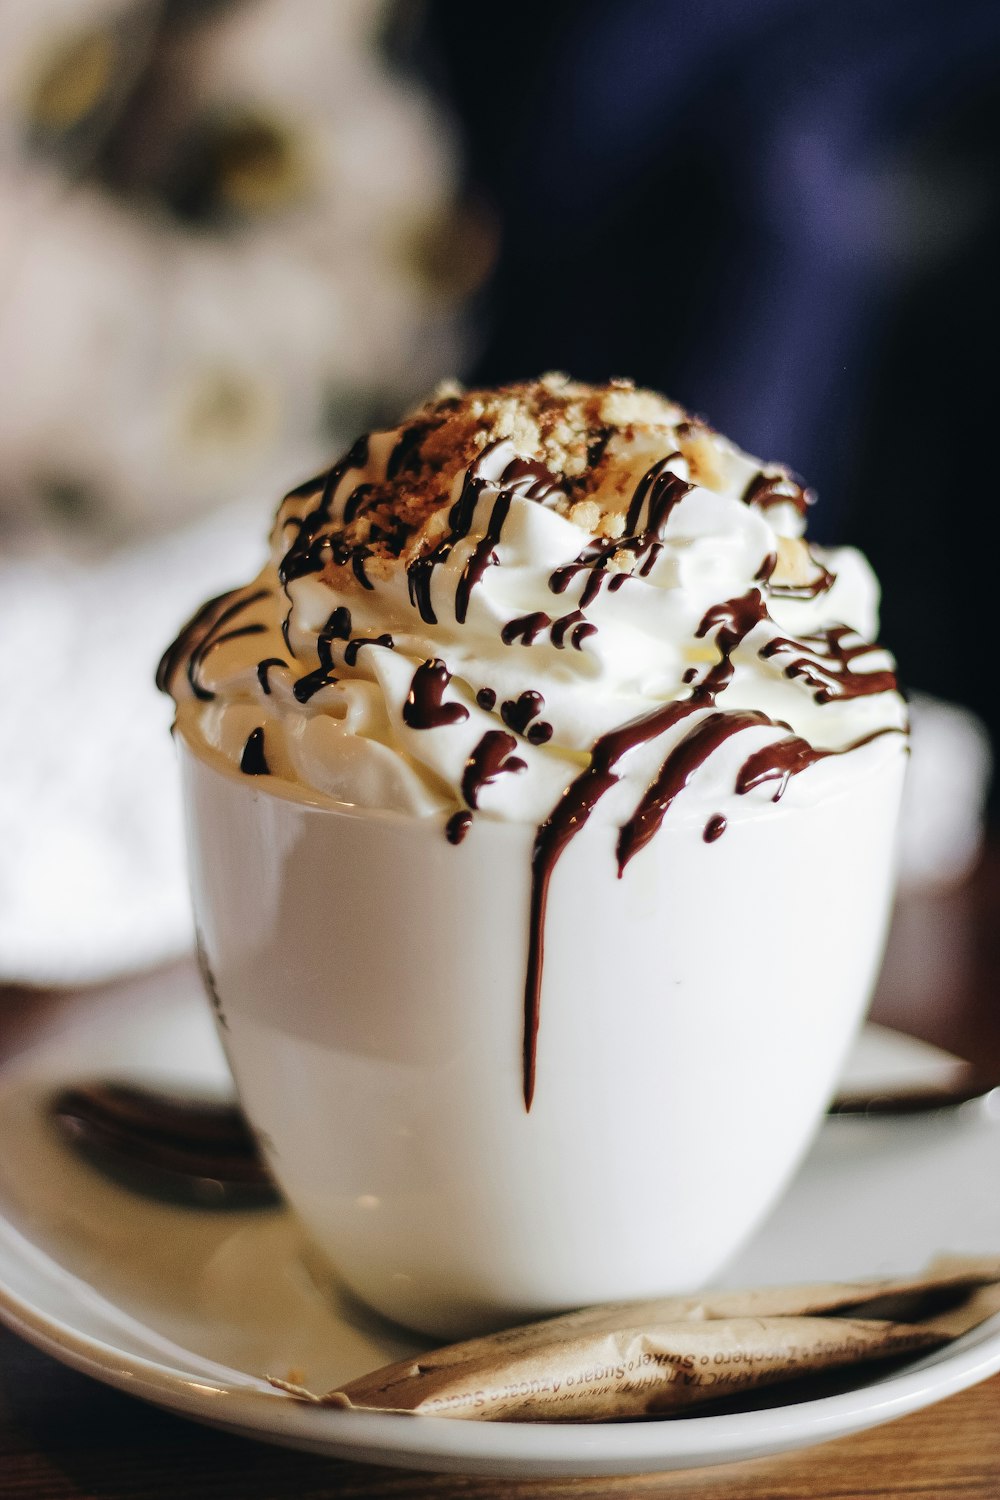 vanilla flavor ice cream with chocolate syrup